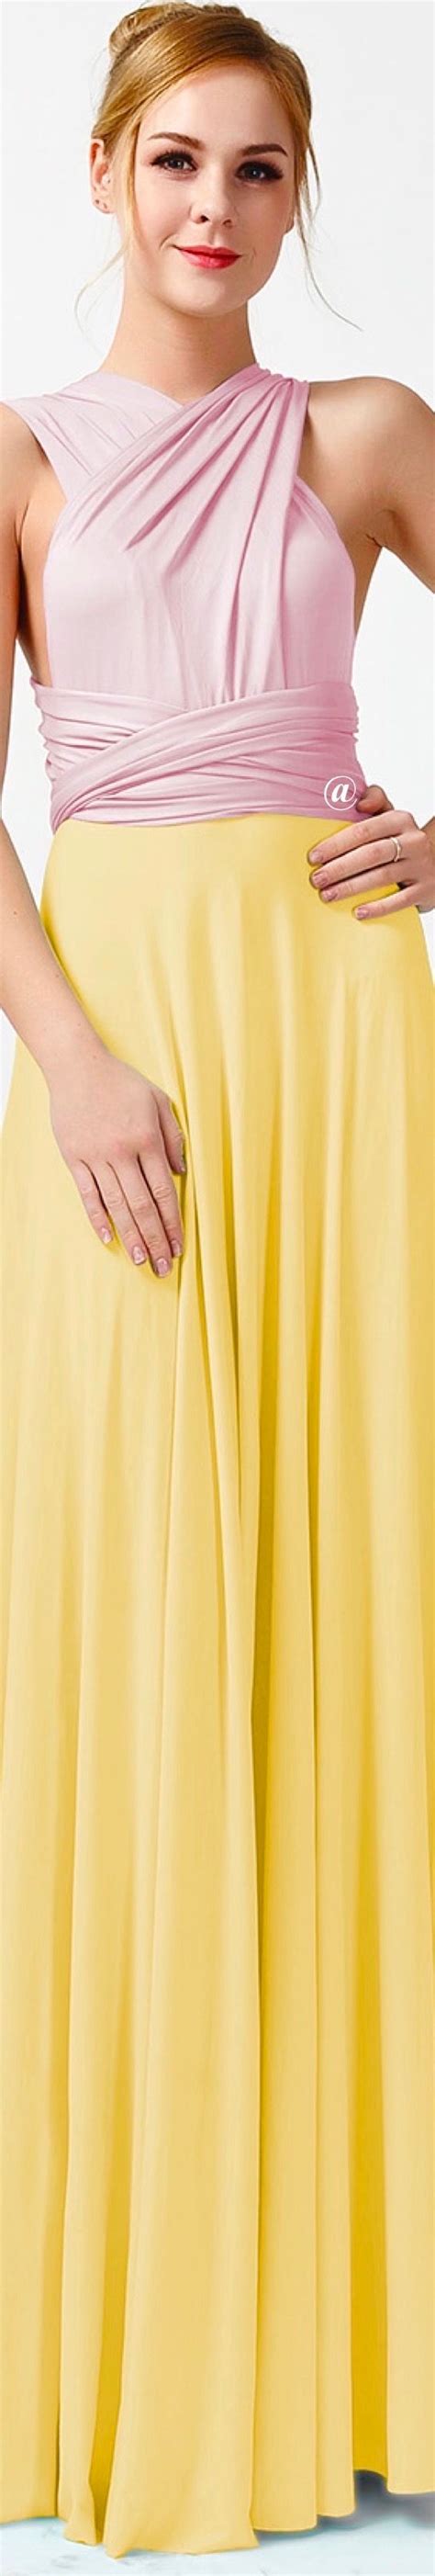 Pinkyellow Dress Yellow Fashion Bridesmaid Dresses Online